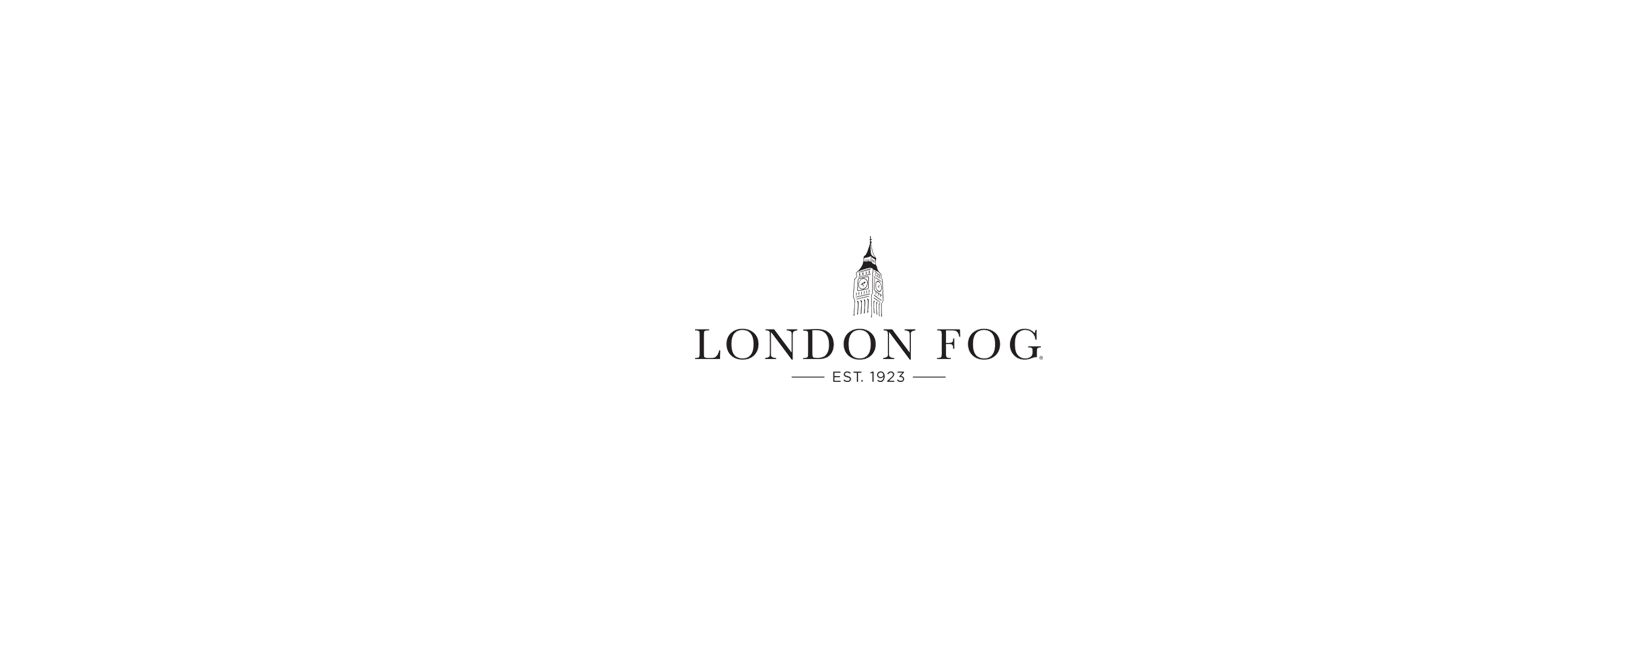 London Fog Discount Code 2022